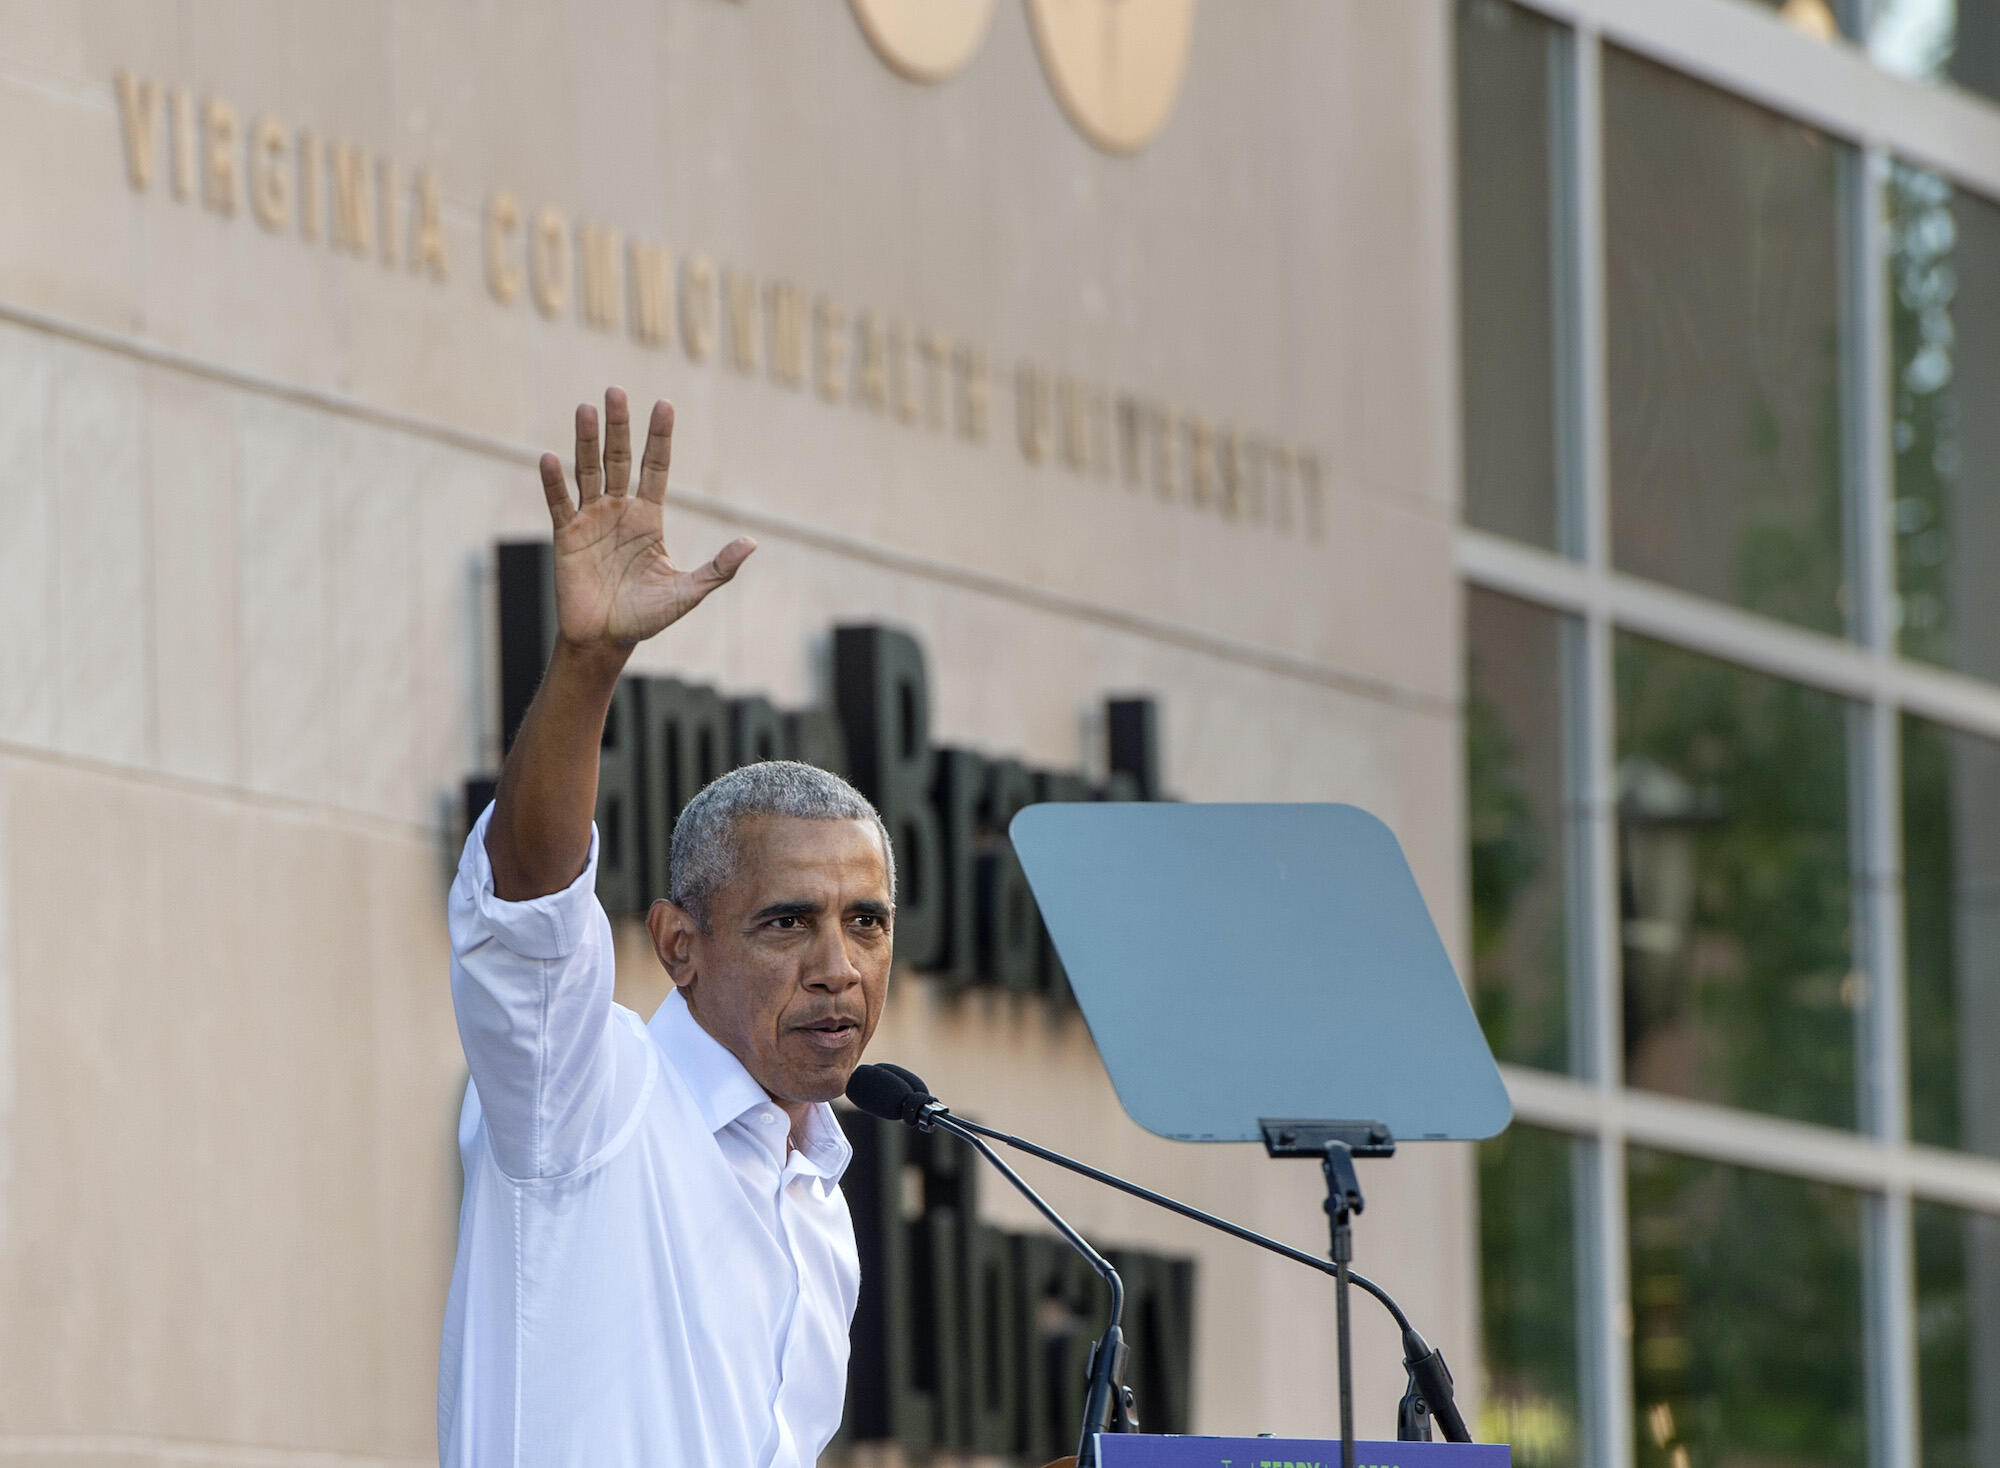 Barack Obama waves to a crowd at VCU.